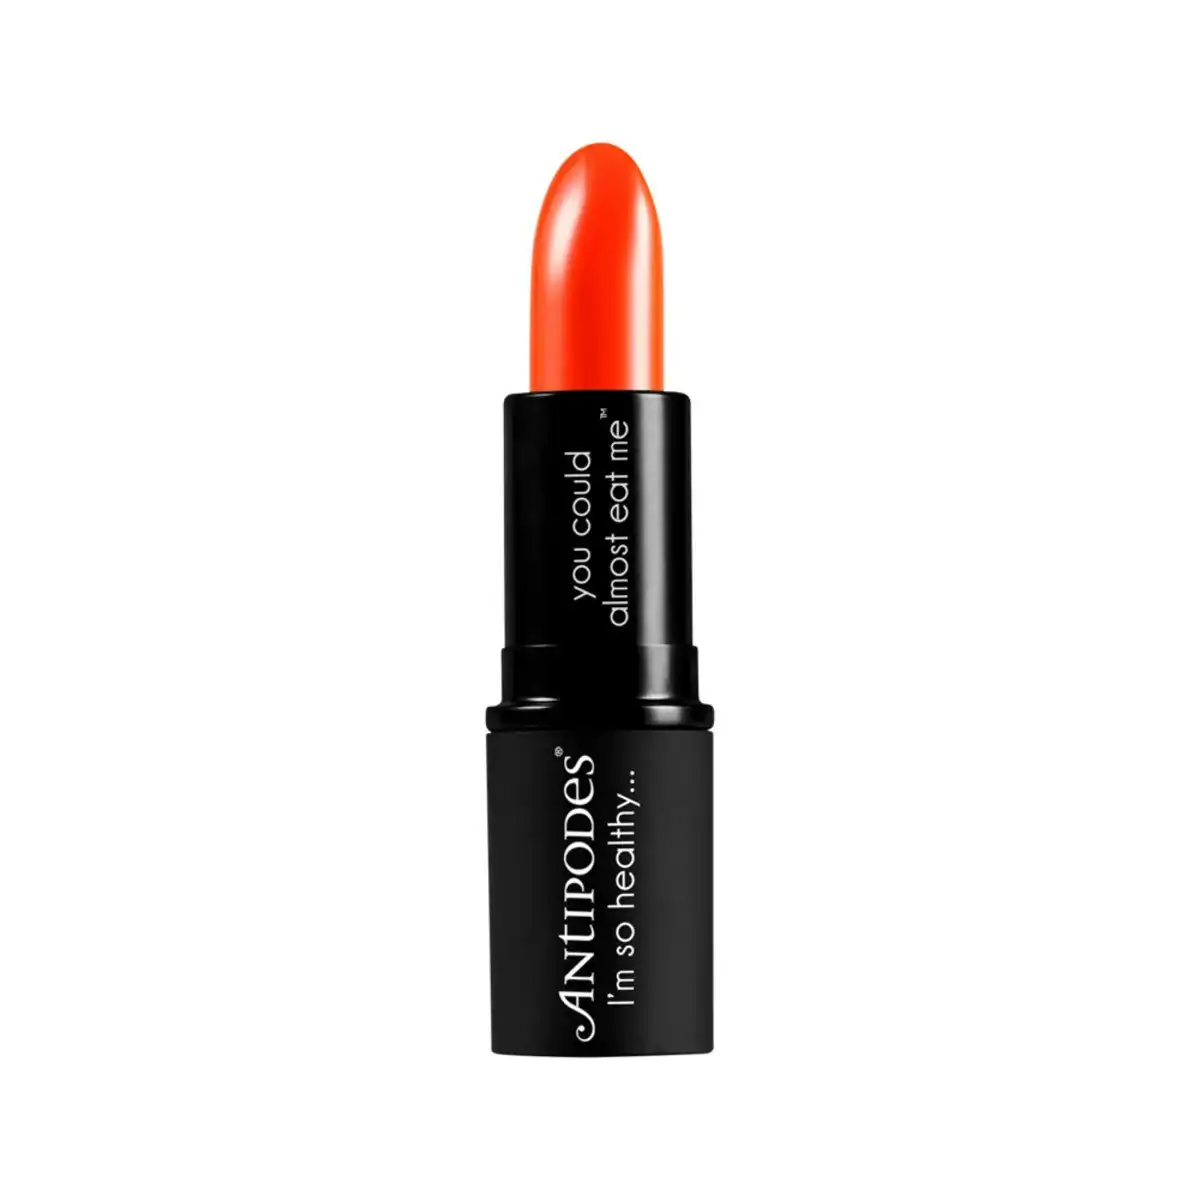 Antipodes Moisture-Boost Natural Lipstick Piha Beach Tangerine 4g